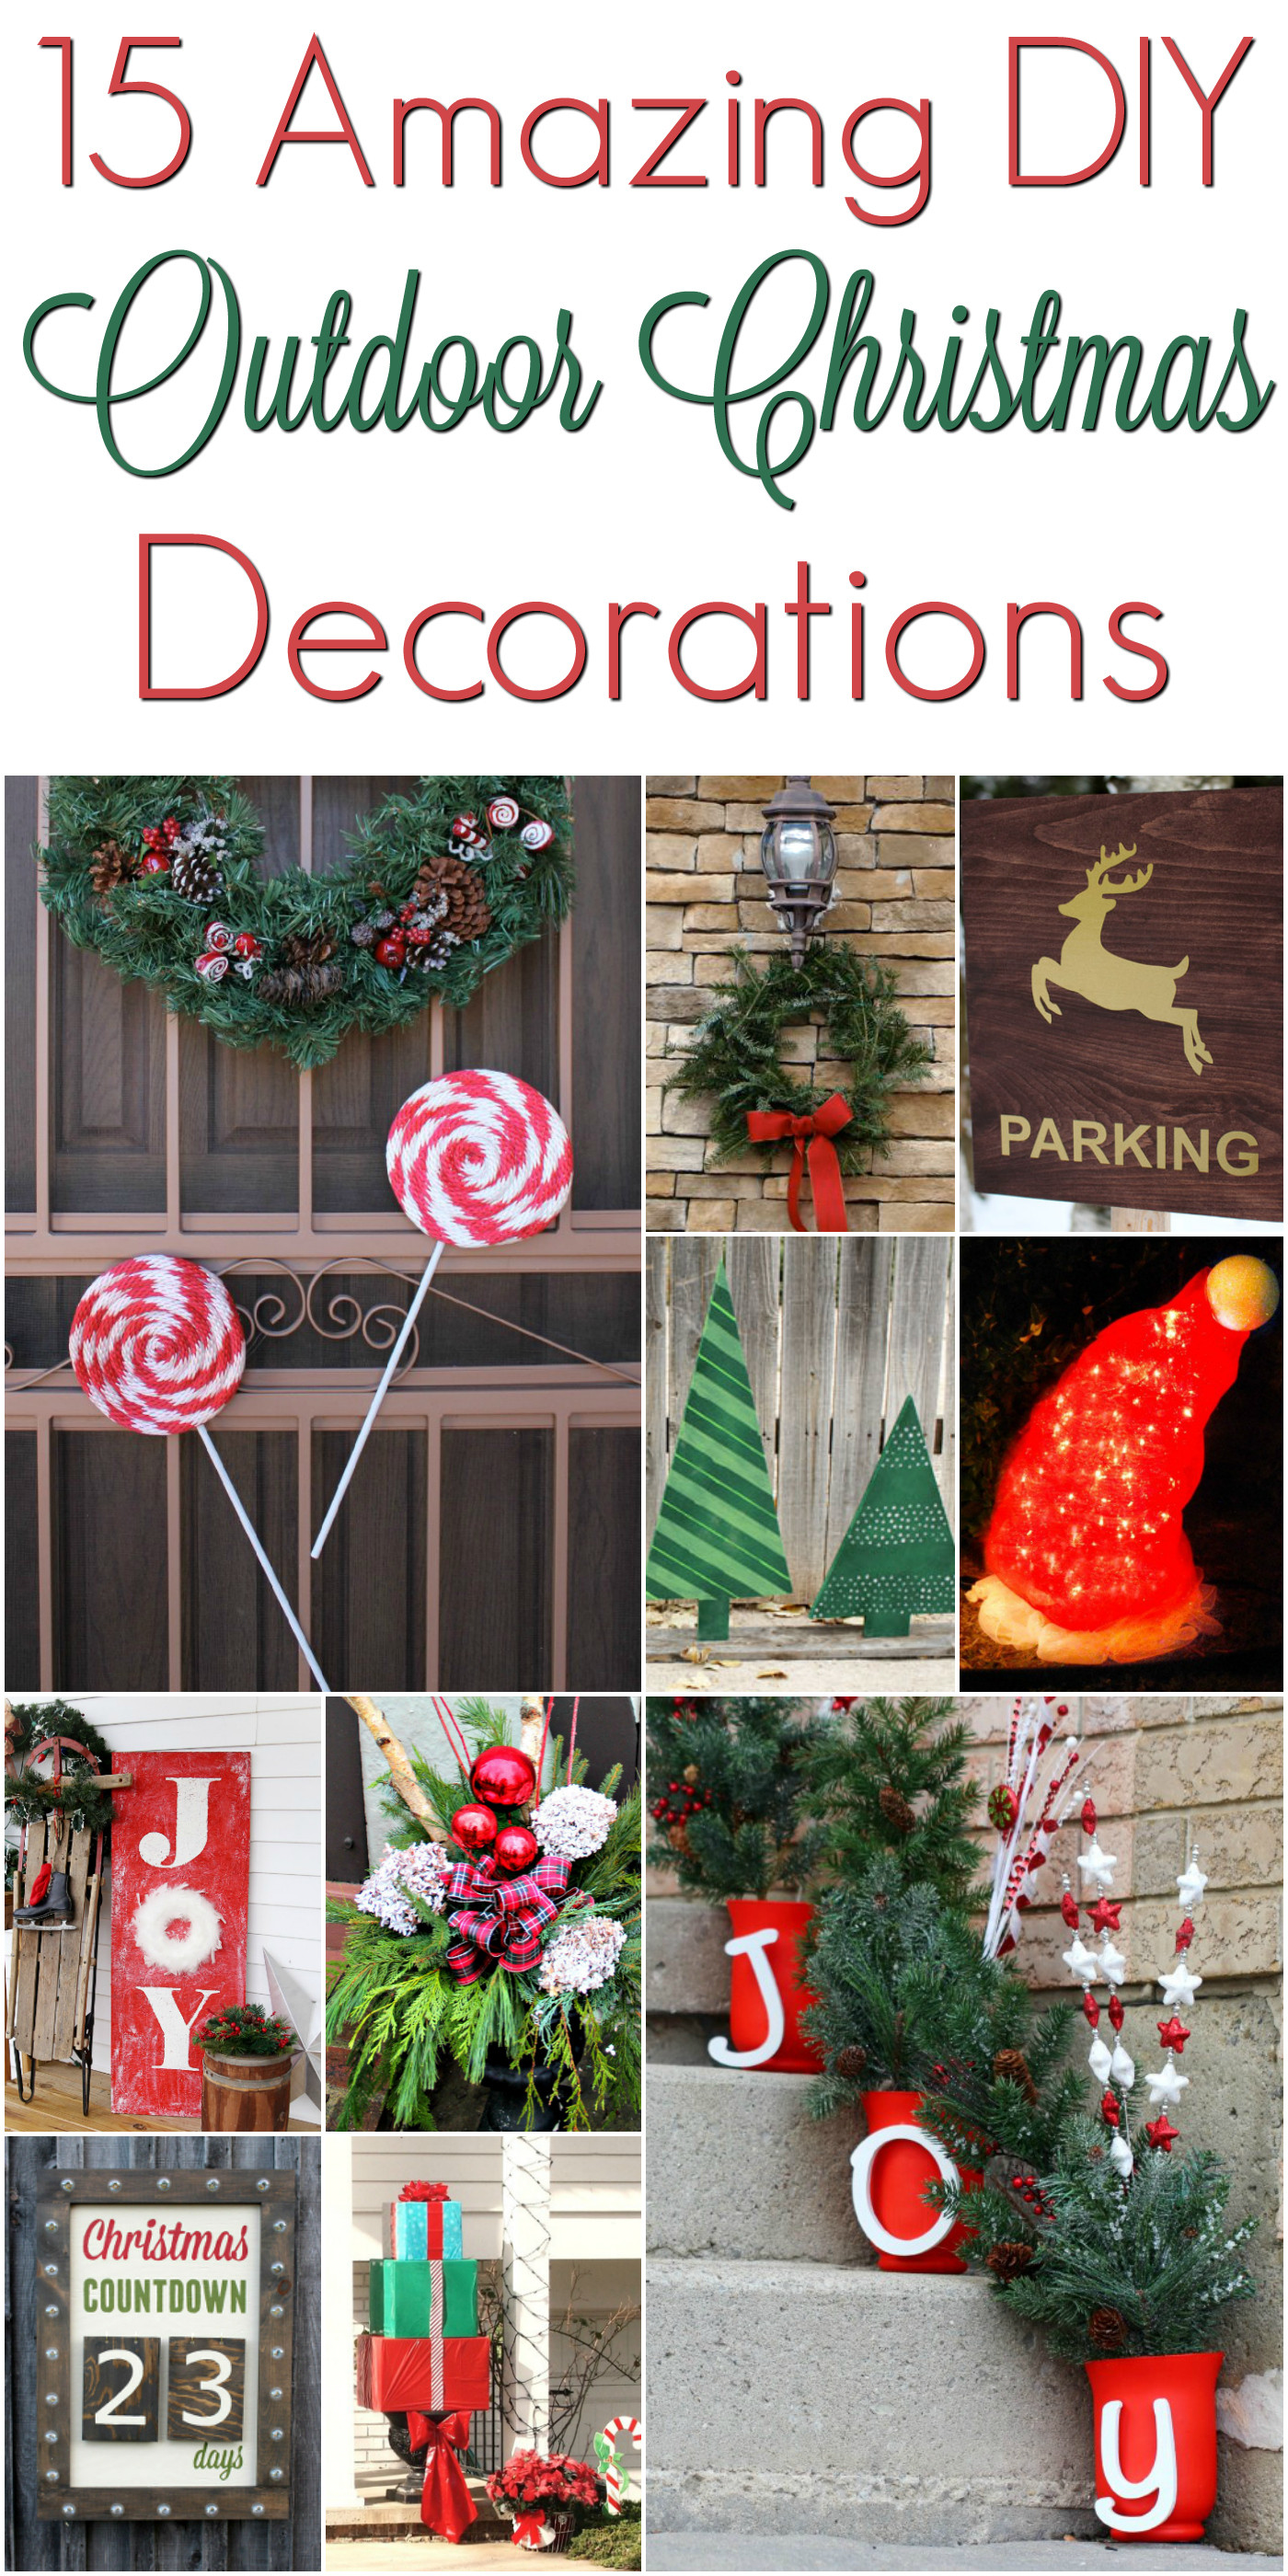 DIY Outside Christmas Decorations
 DIY Christmas Outdoor Decorations ChristmasDecorations